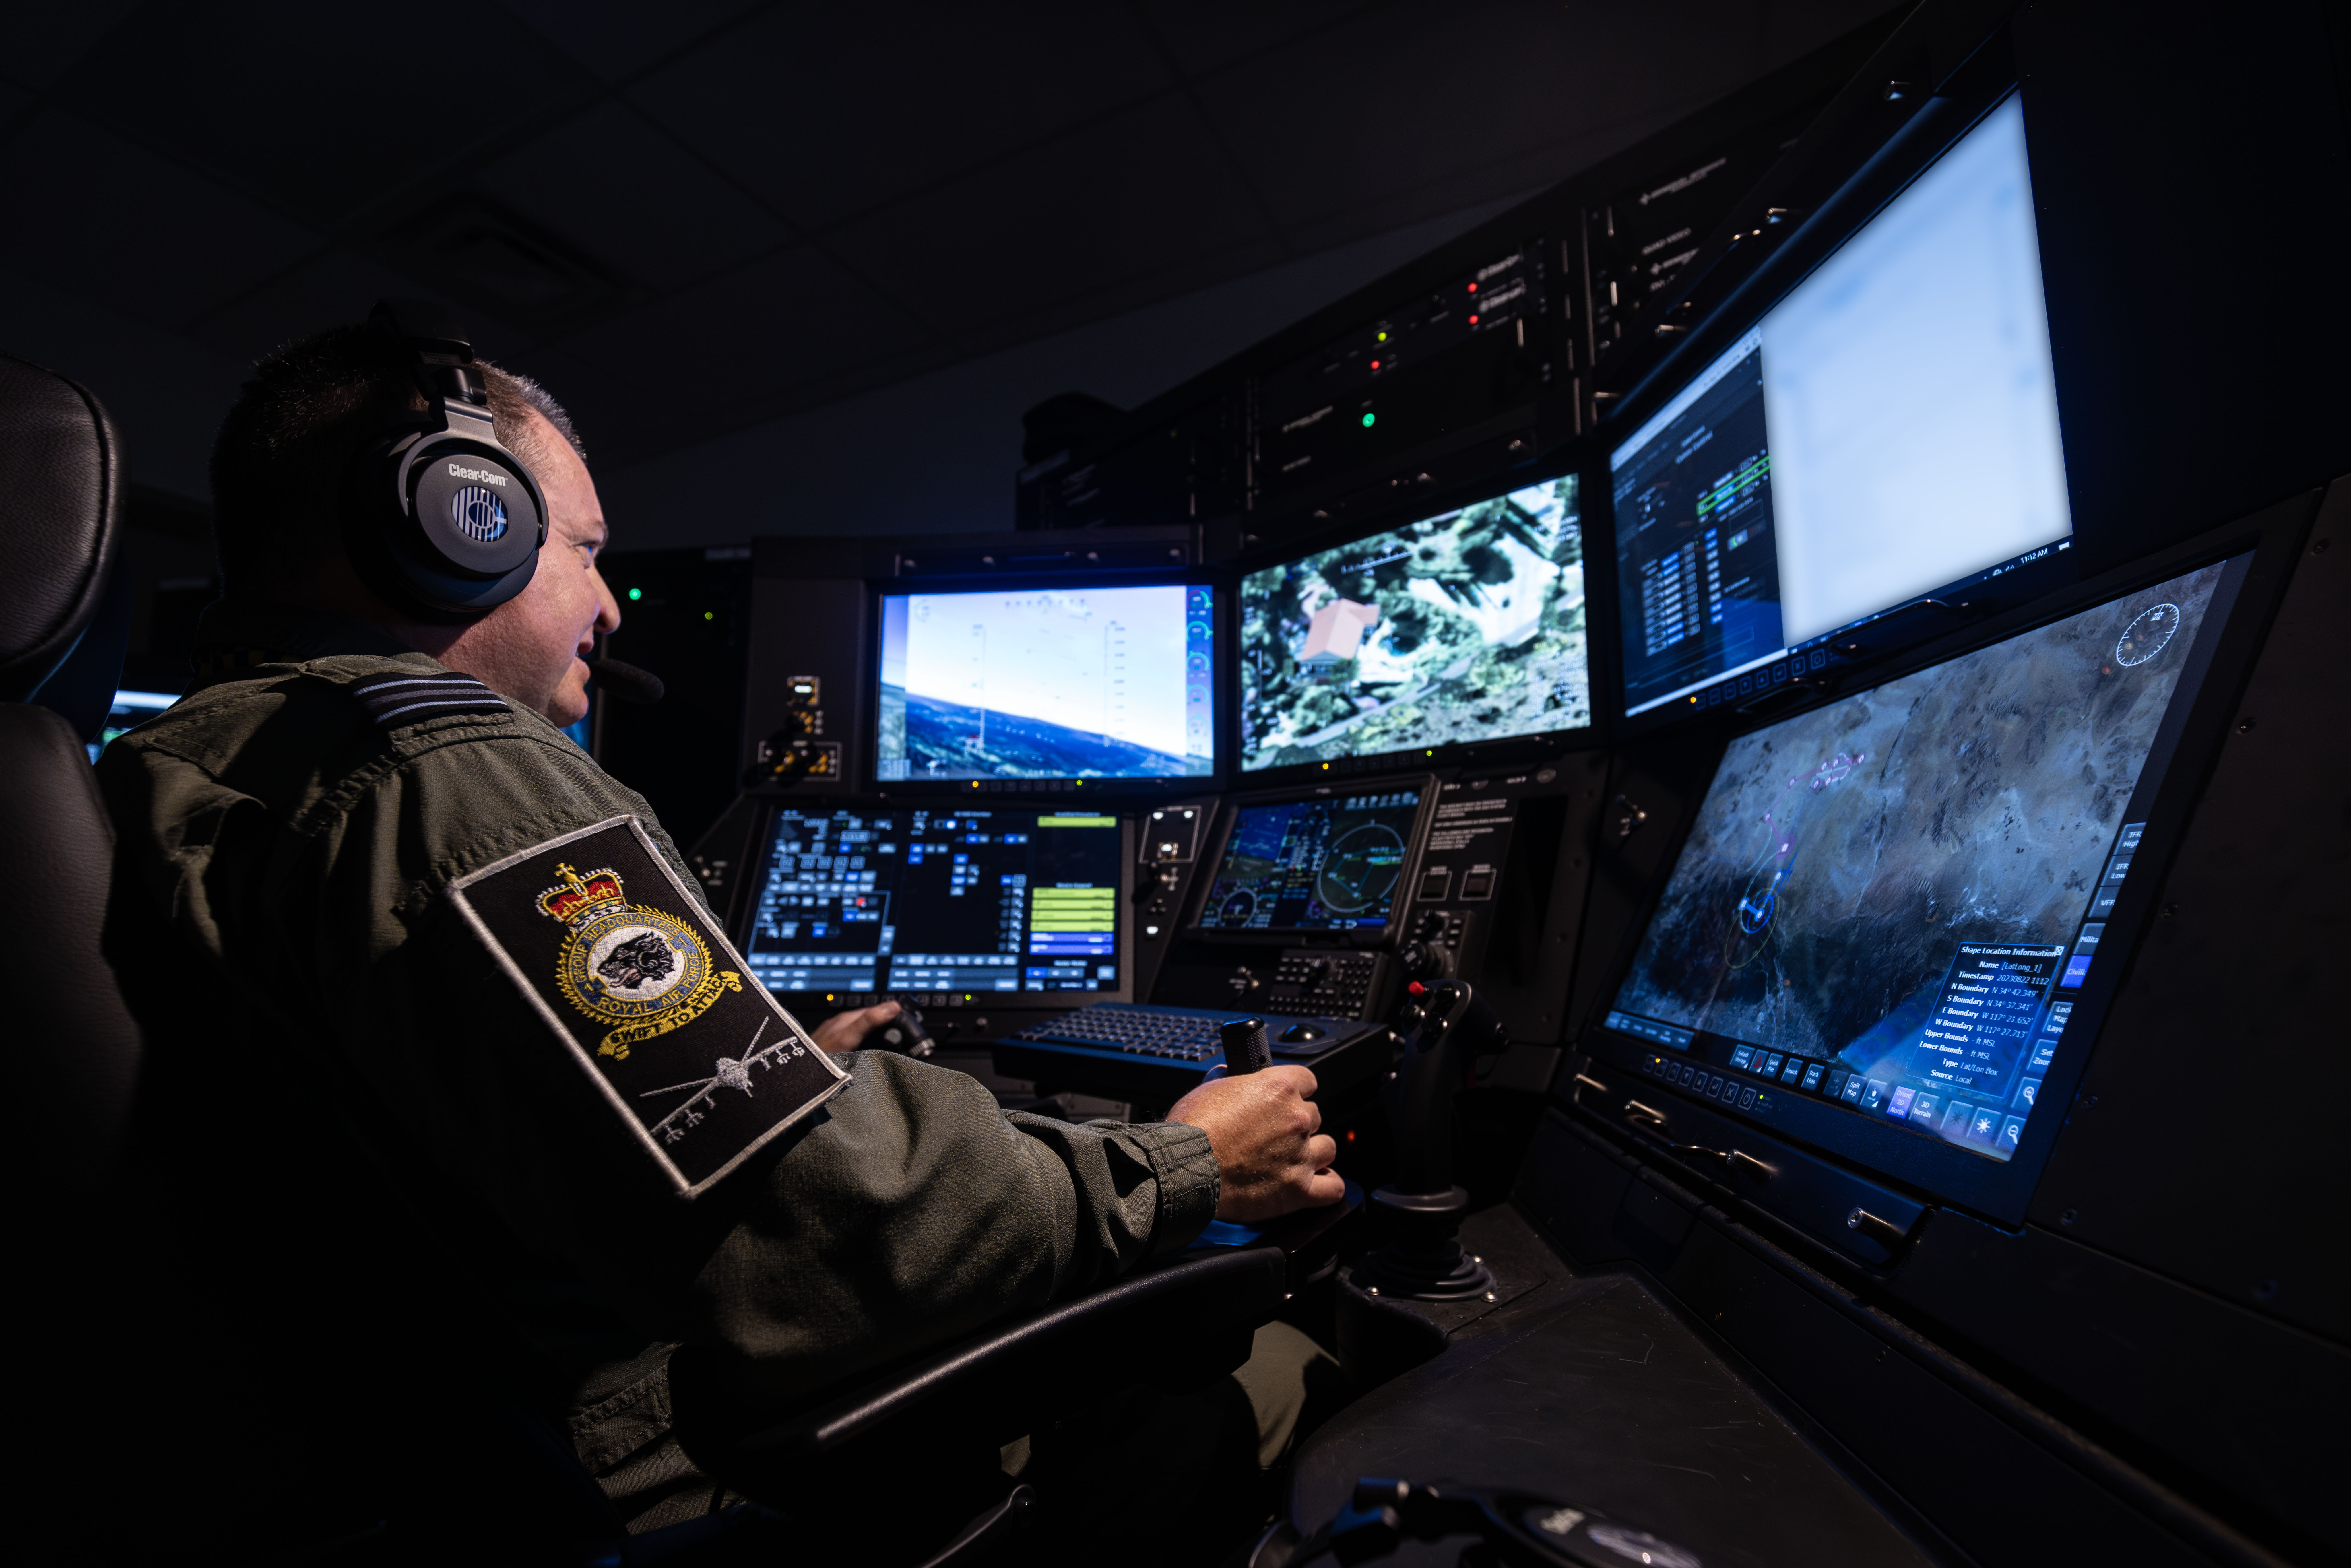 RAF pilot sat at high tech simulator training suite